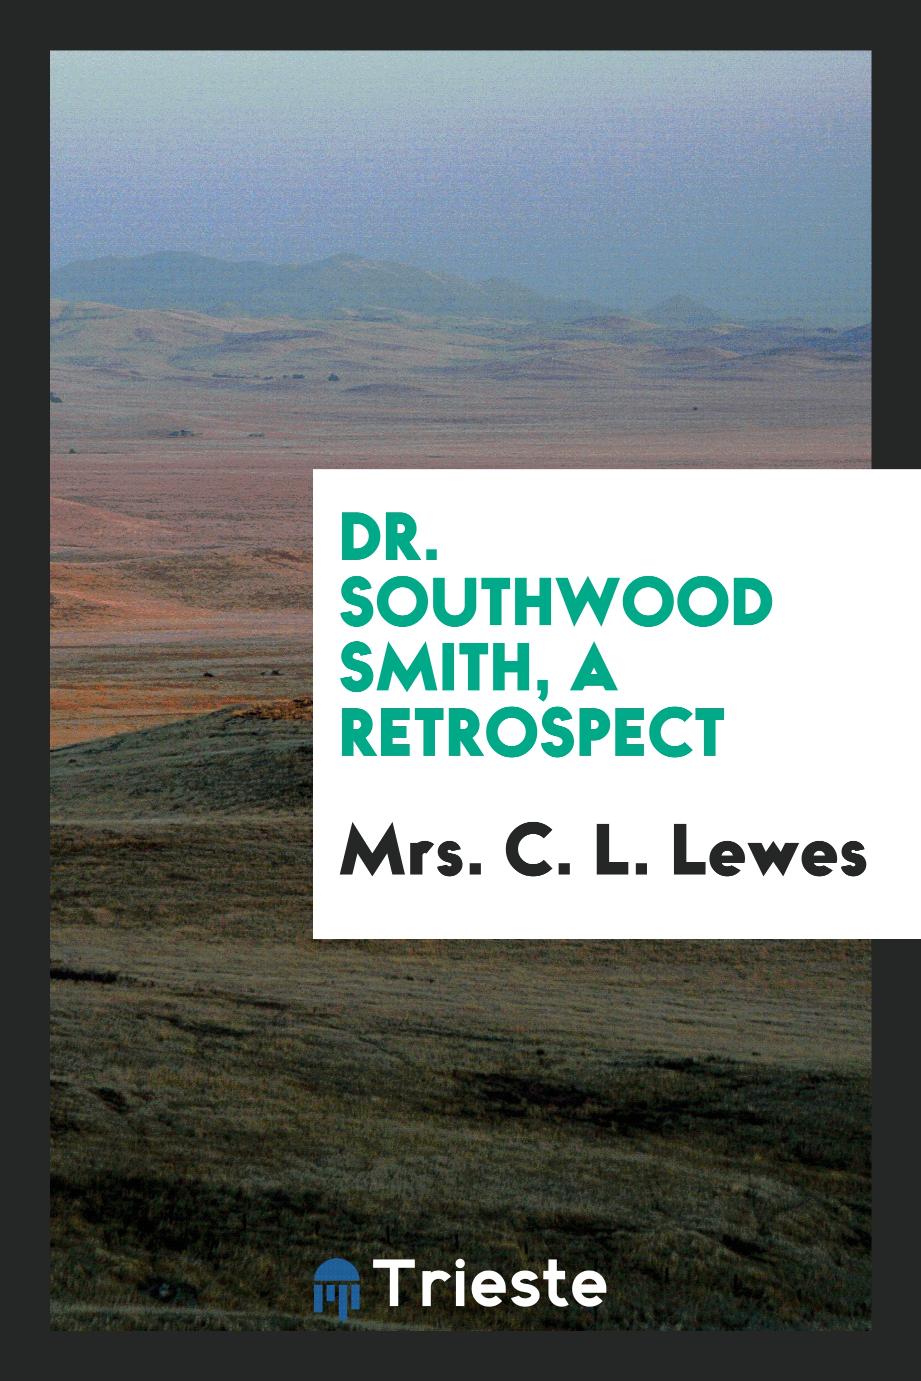 Dr. Southwood Smith, a retrospect